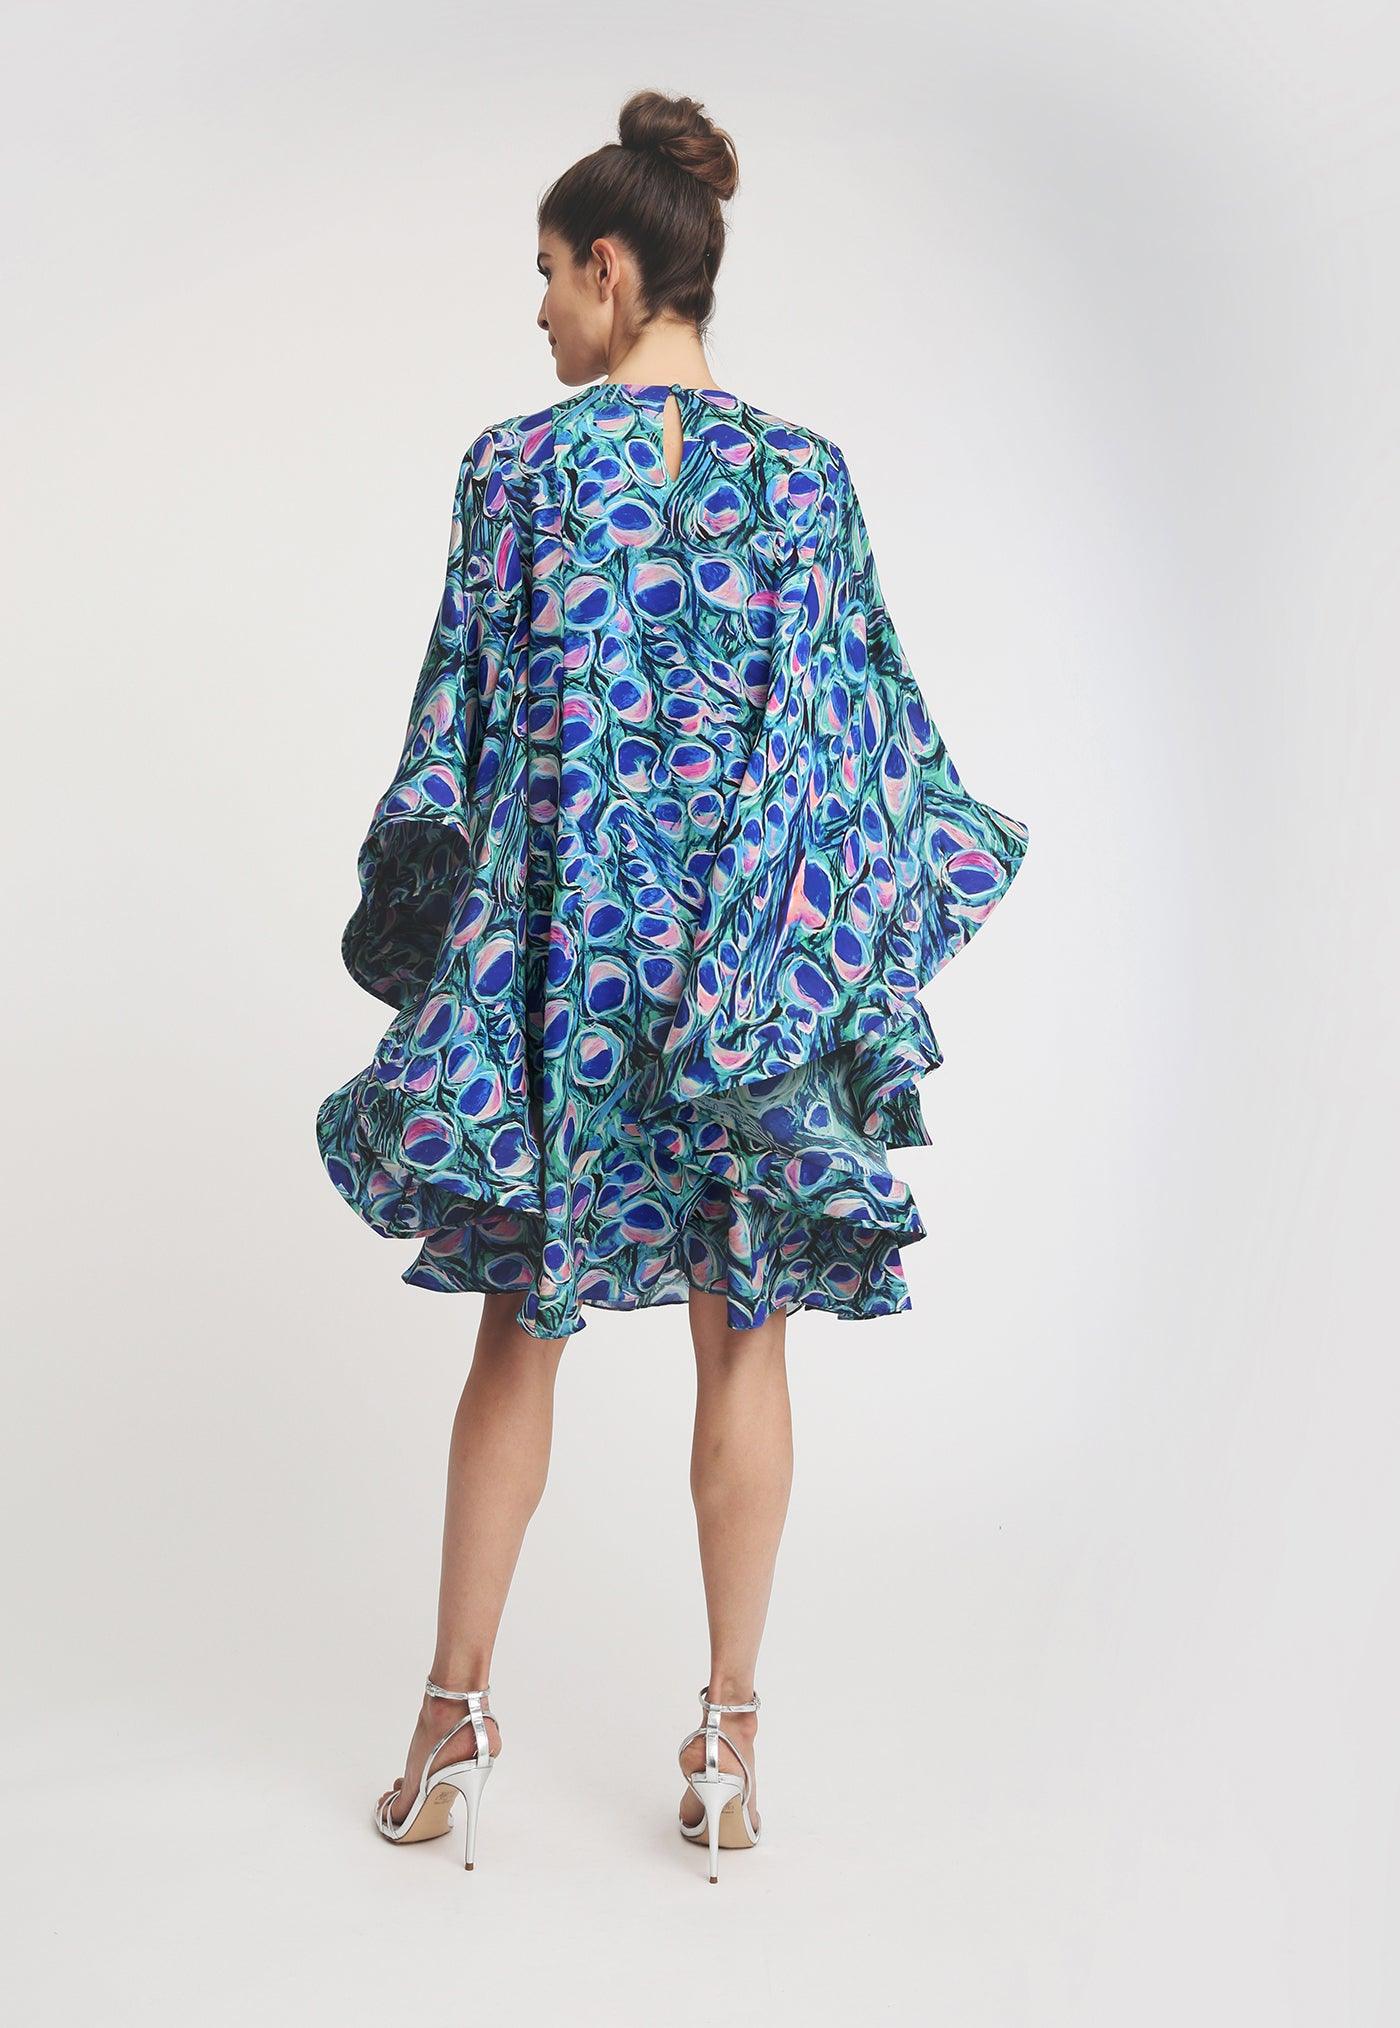 ruffled sleeve peacock printed knee length dress